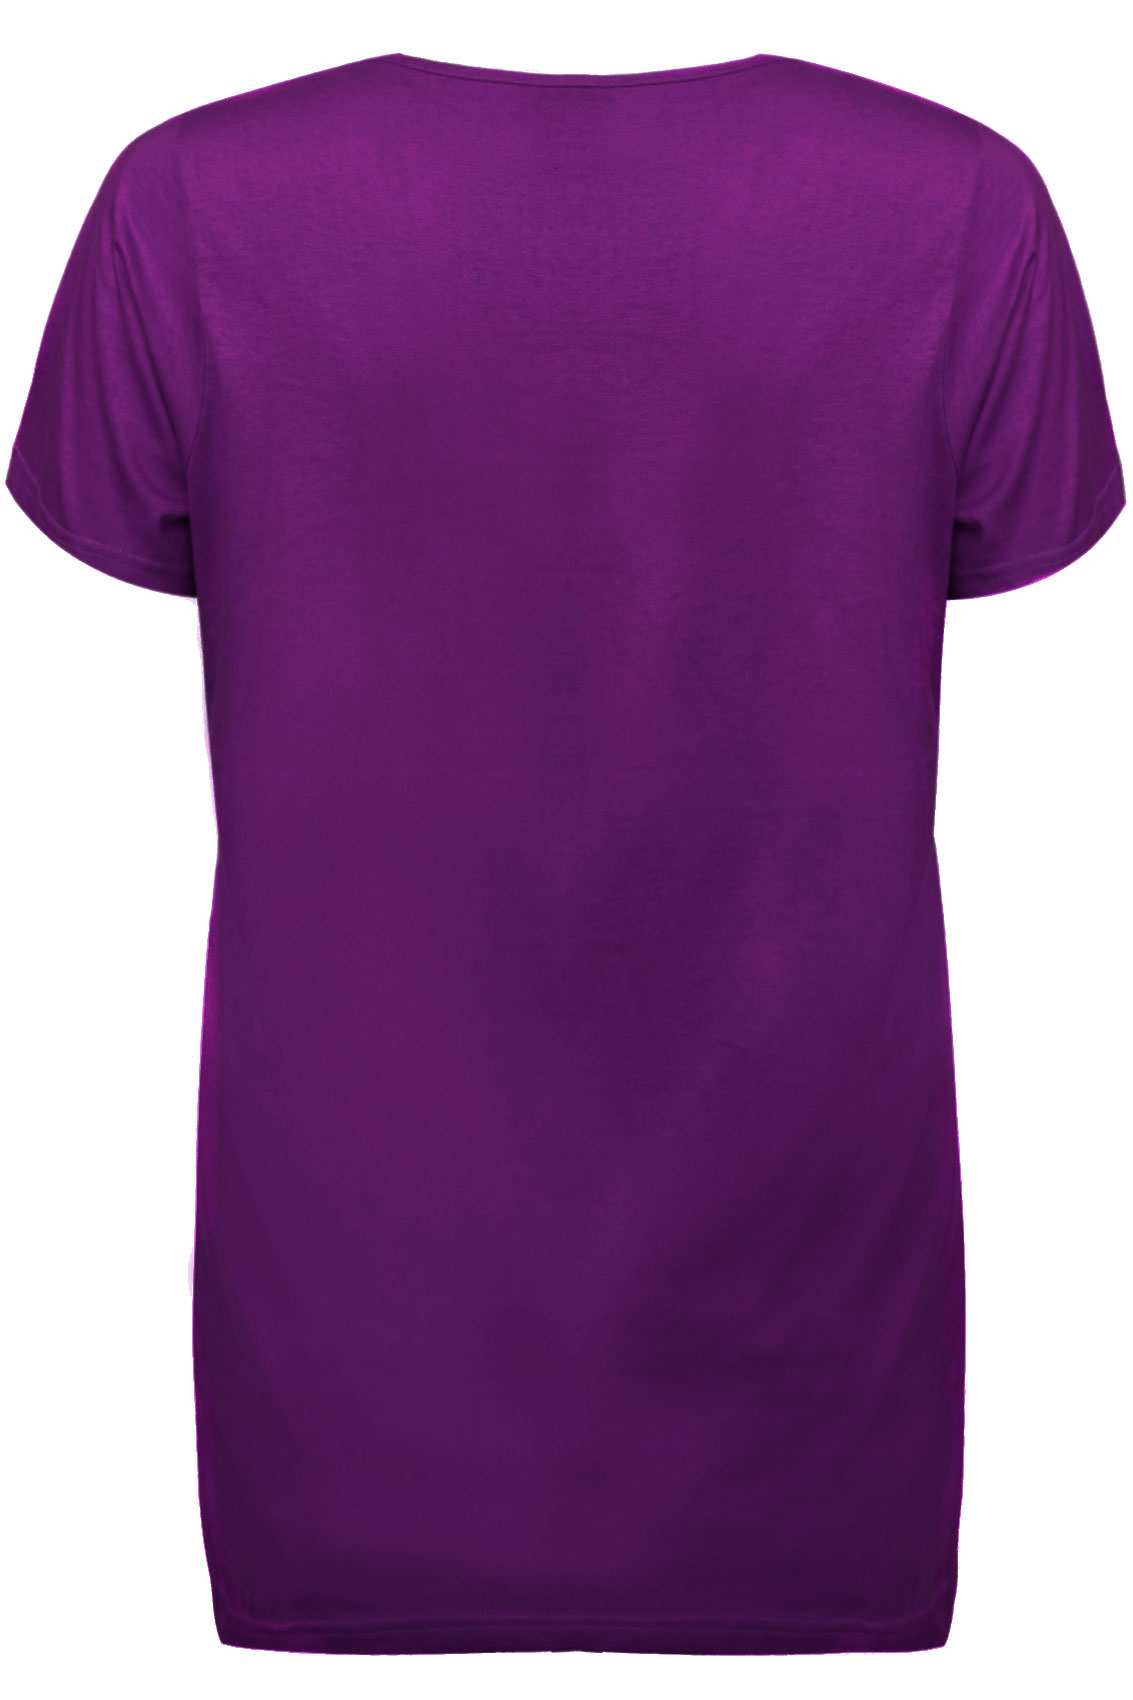 Purple Plain Basic Short Sleeved V Neck T Shirt Plus Size 16 To 32